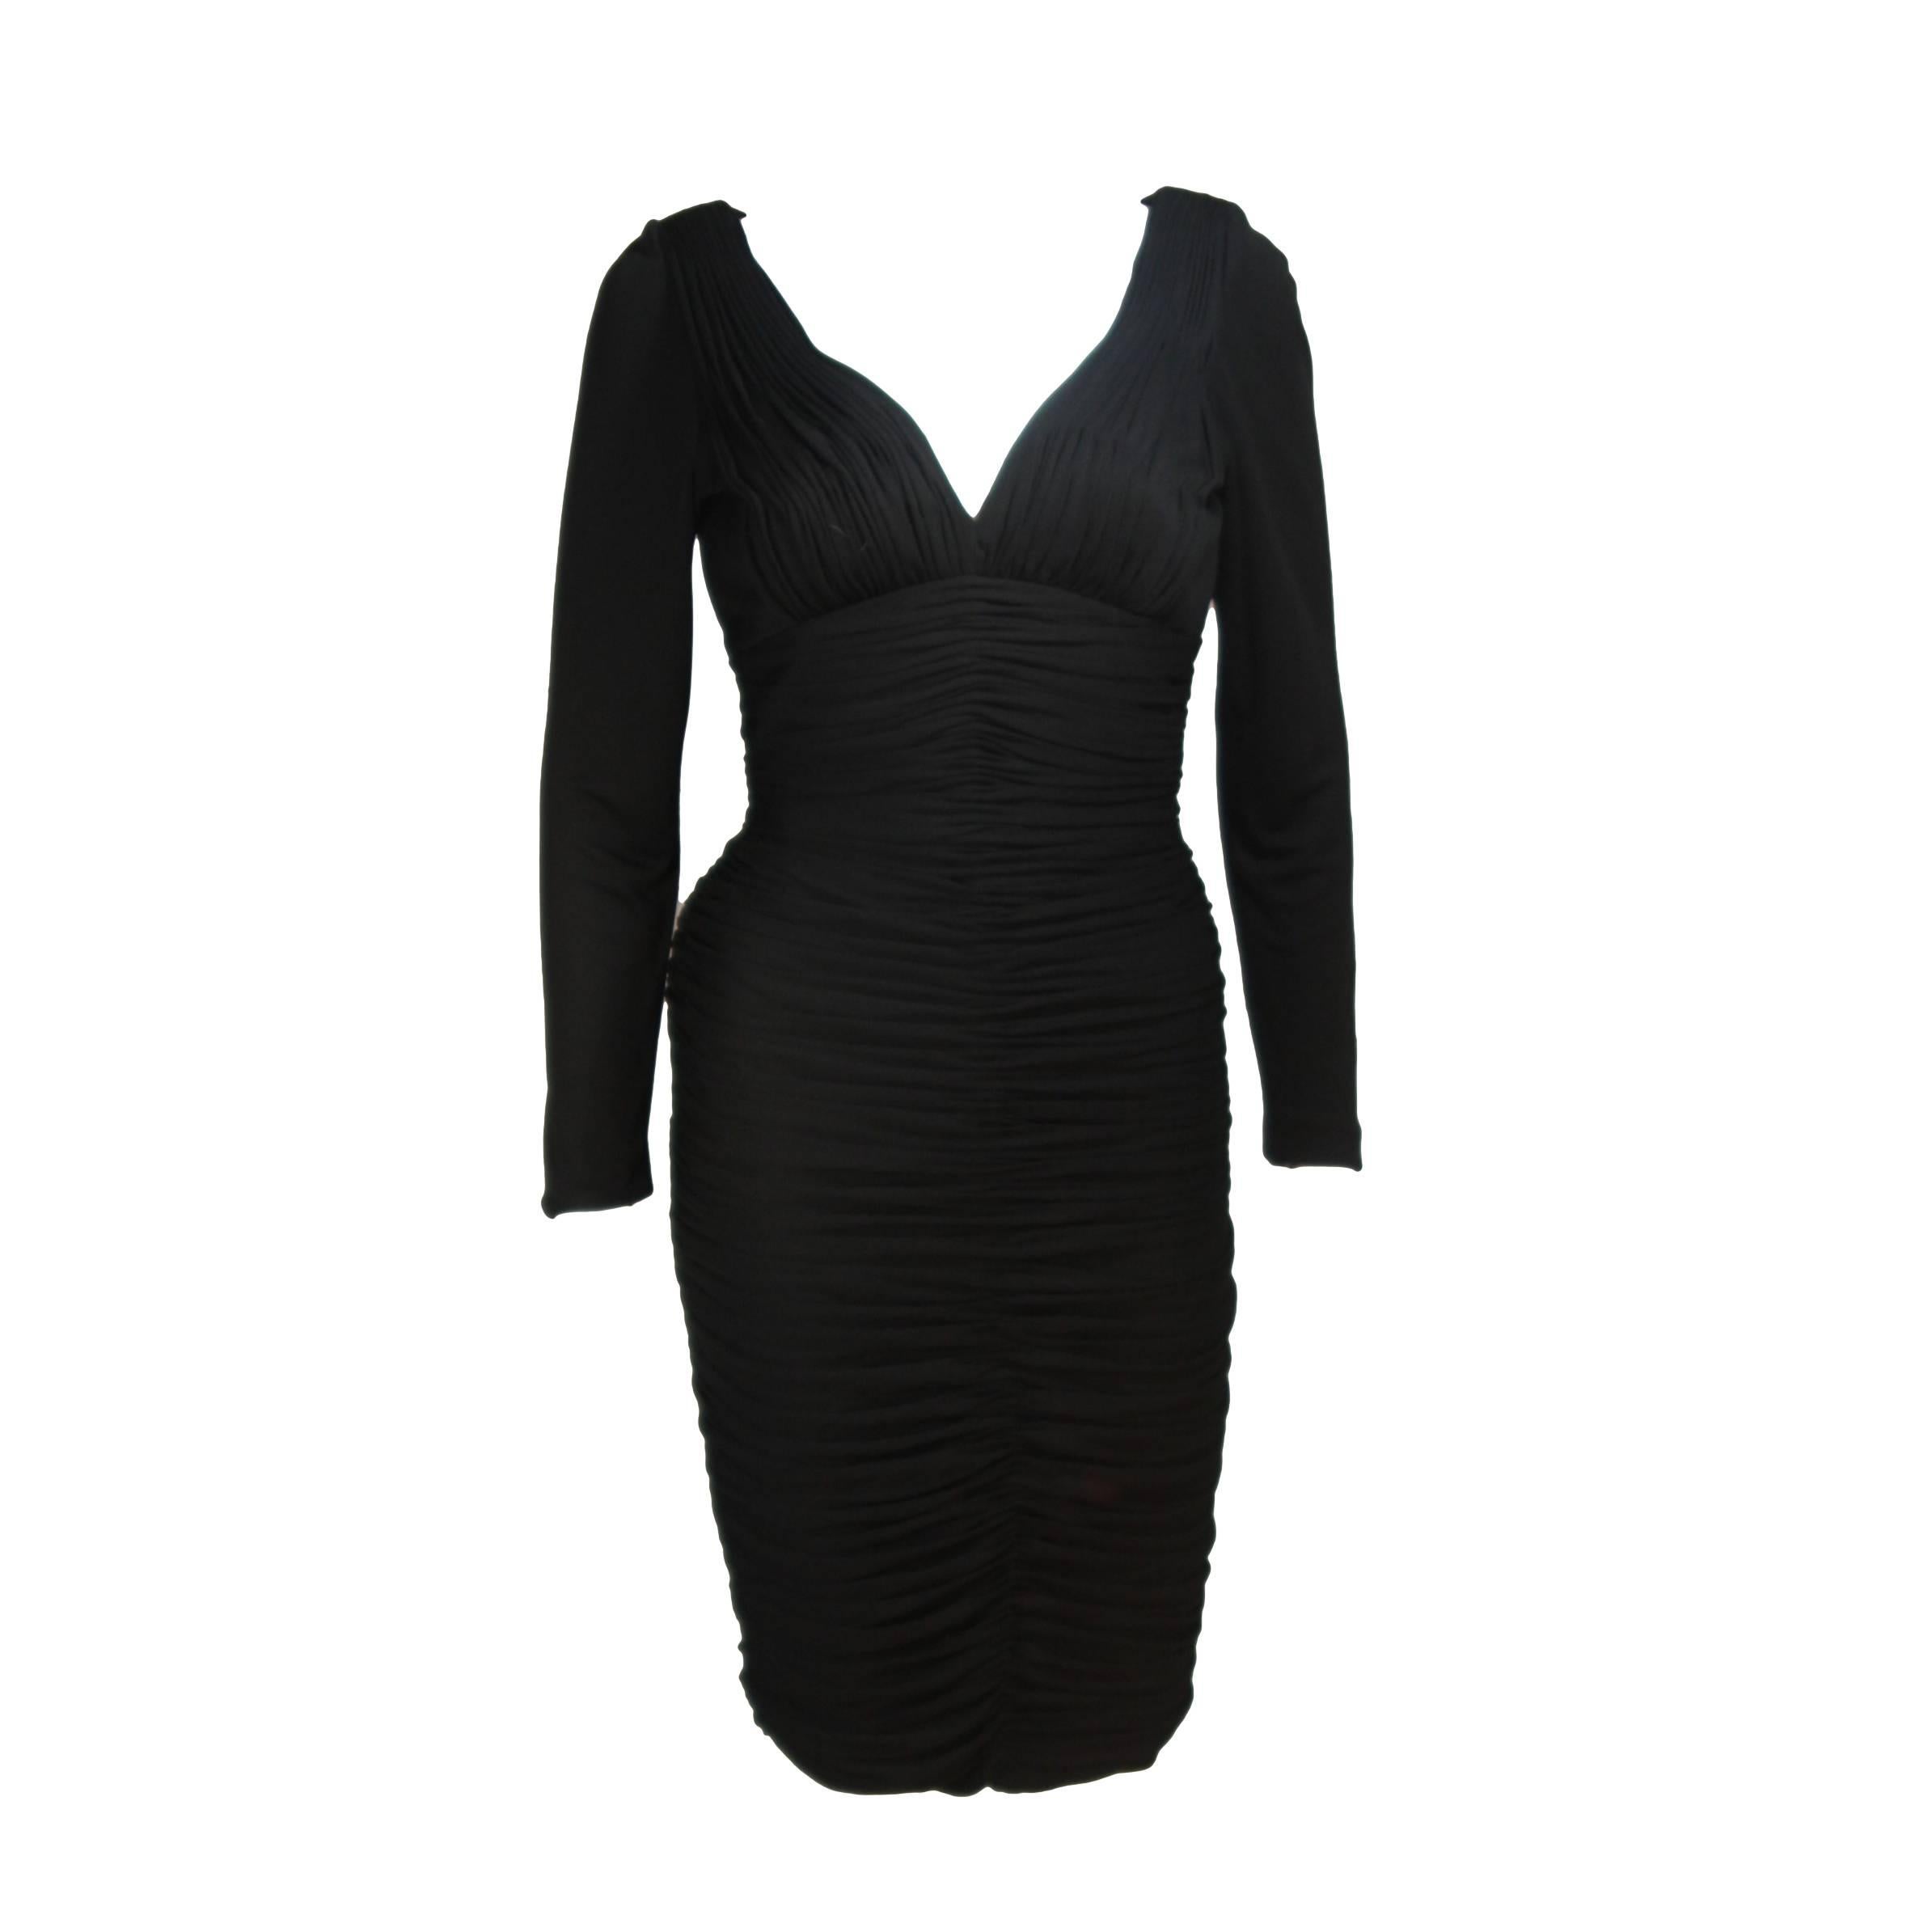 VICKY TIEL Black Long Sleeve Rouched Jersey Cocktail Dress Size 4-6